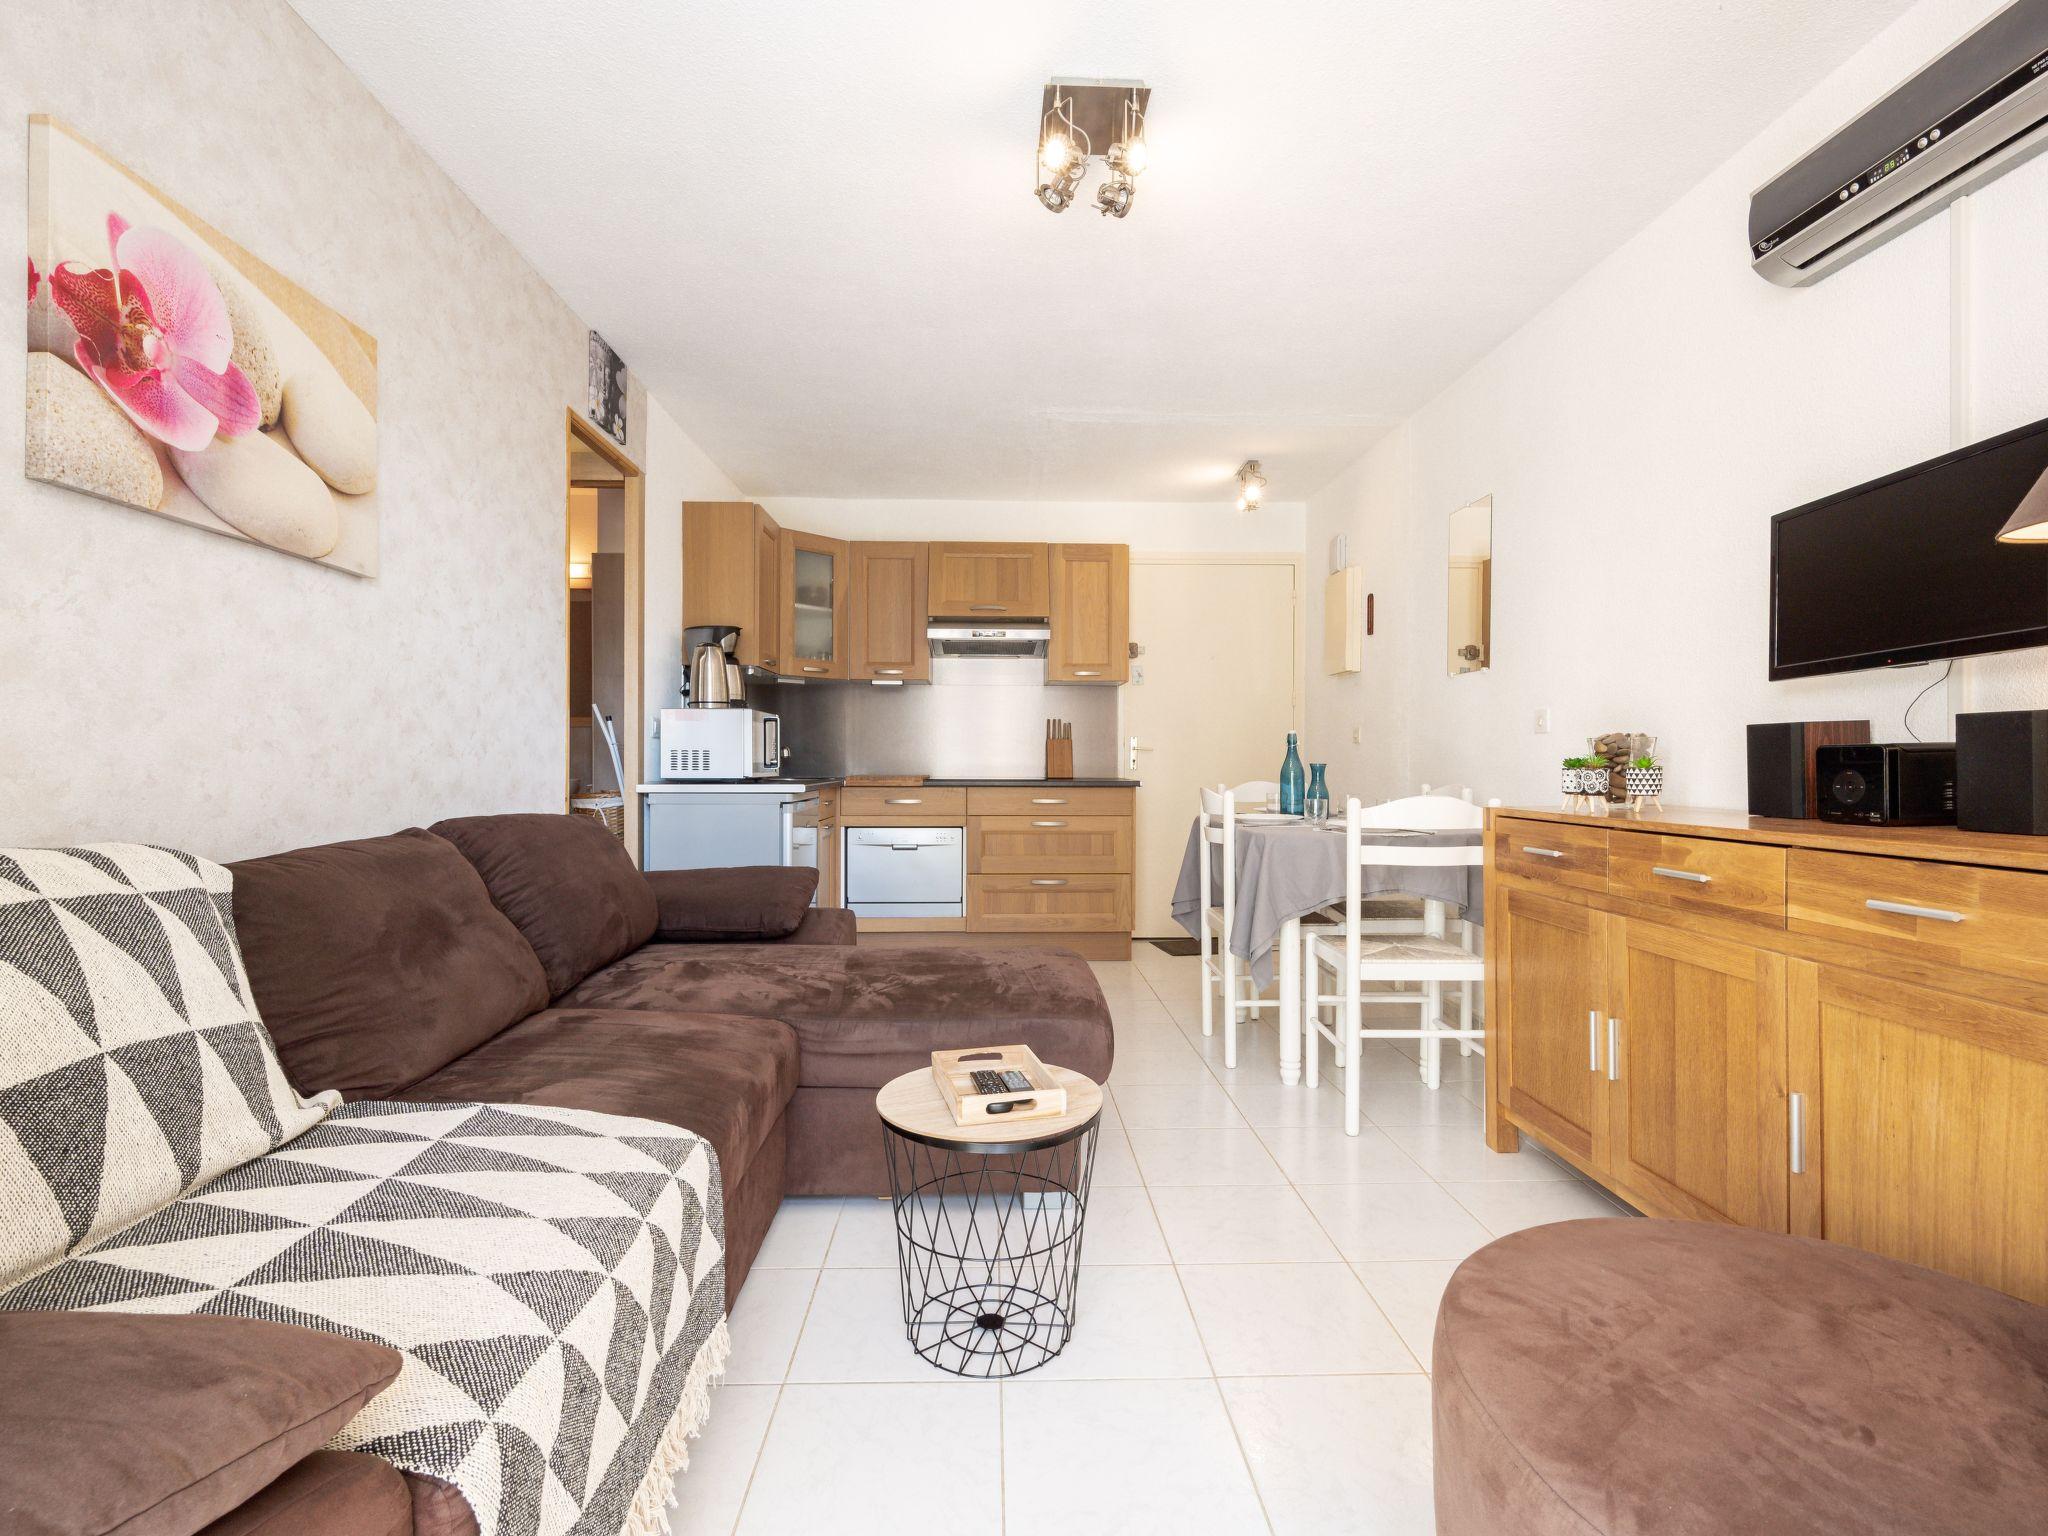 Foto 1 - Apartment mit 1 Schlafzimmer in Le Barcarès mit blick aufs meer